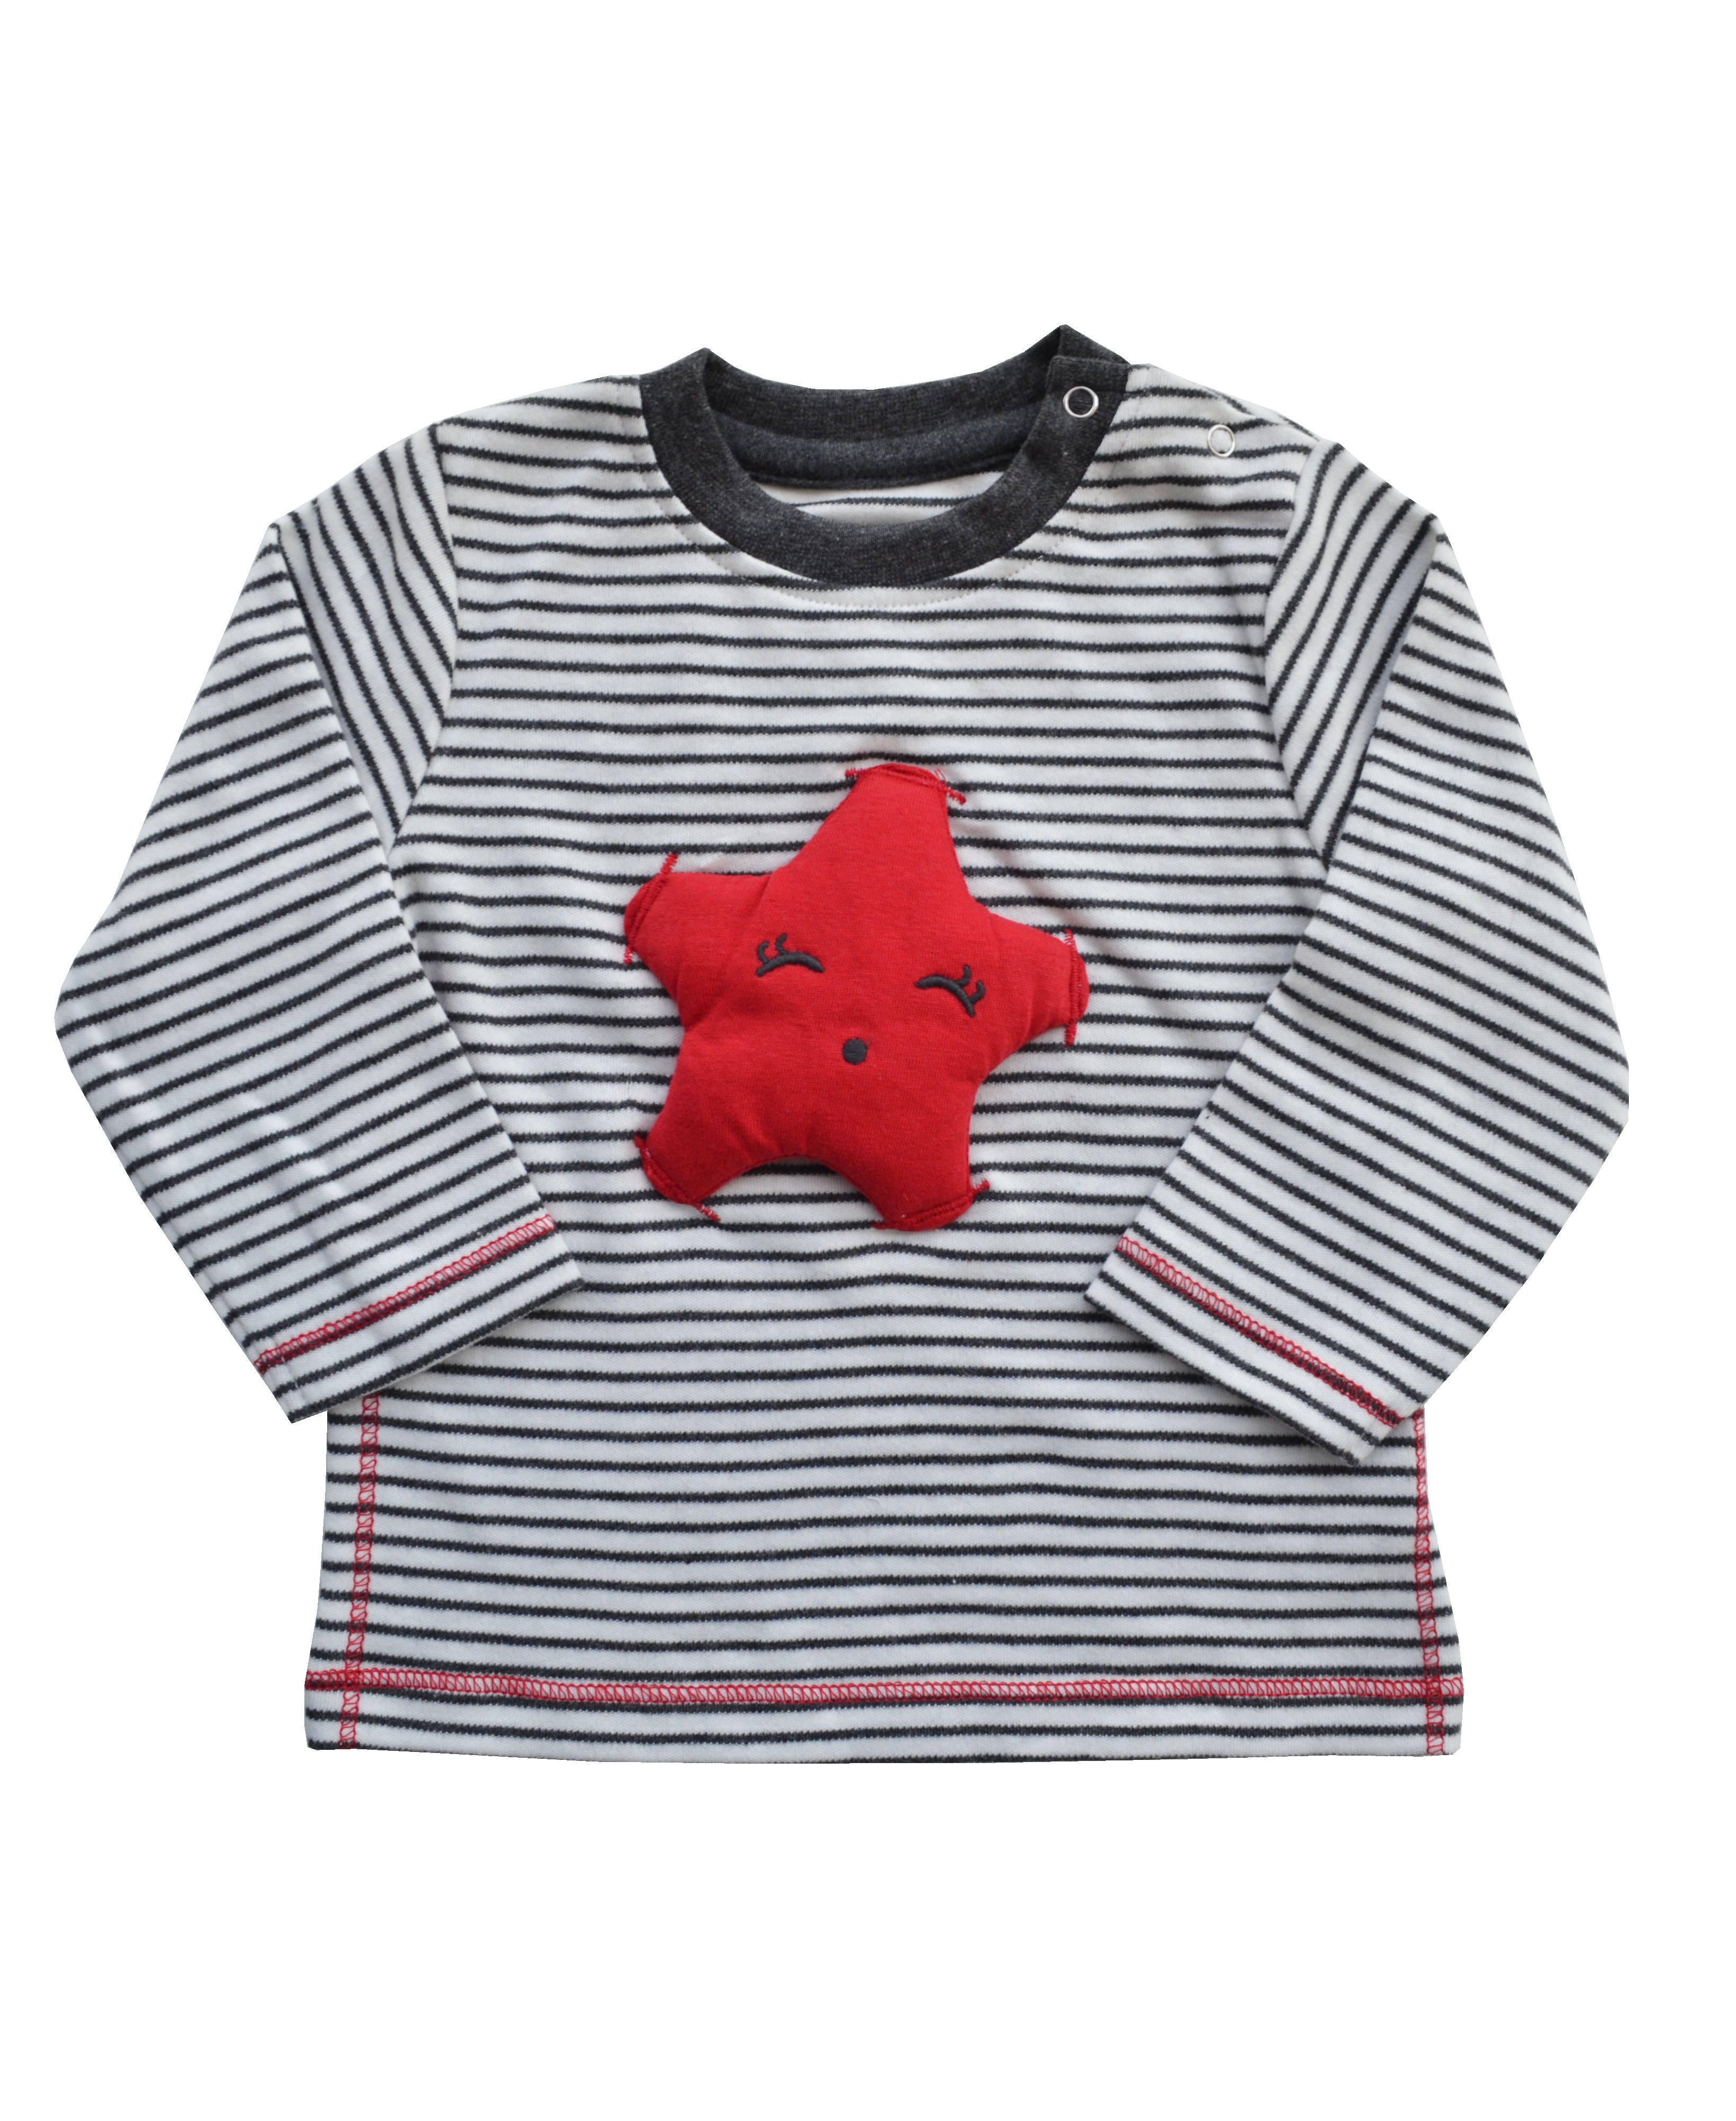 Star Applique on Grey / White Striped Full Sleeves T-Shirt (100% Cotton Interlock Biowash)